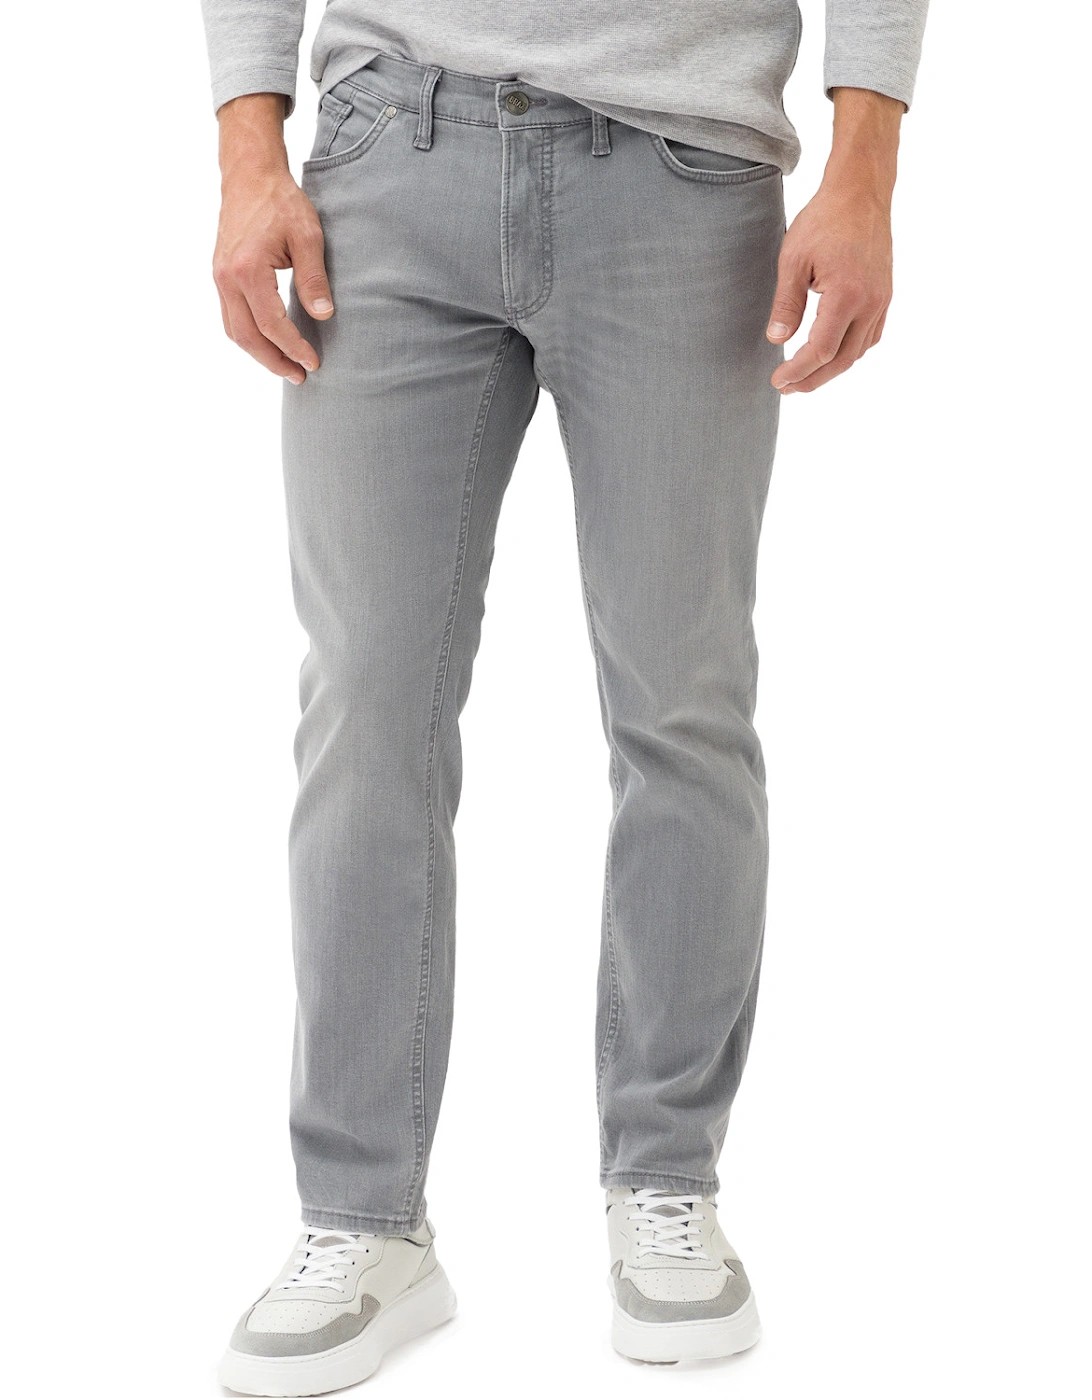 Mens Chuck Stretch Jeans (Grey)